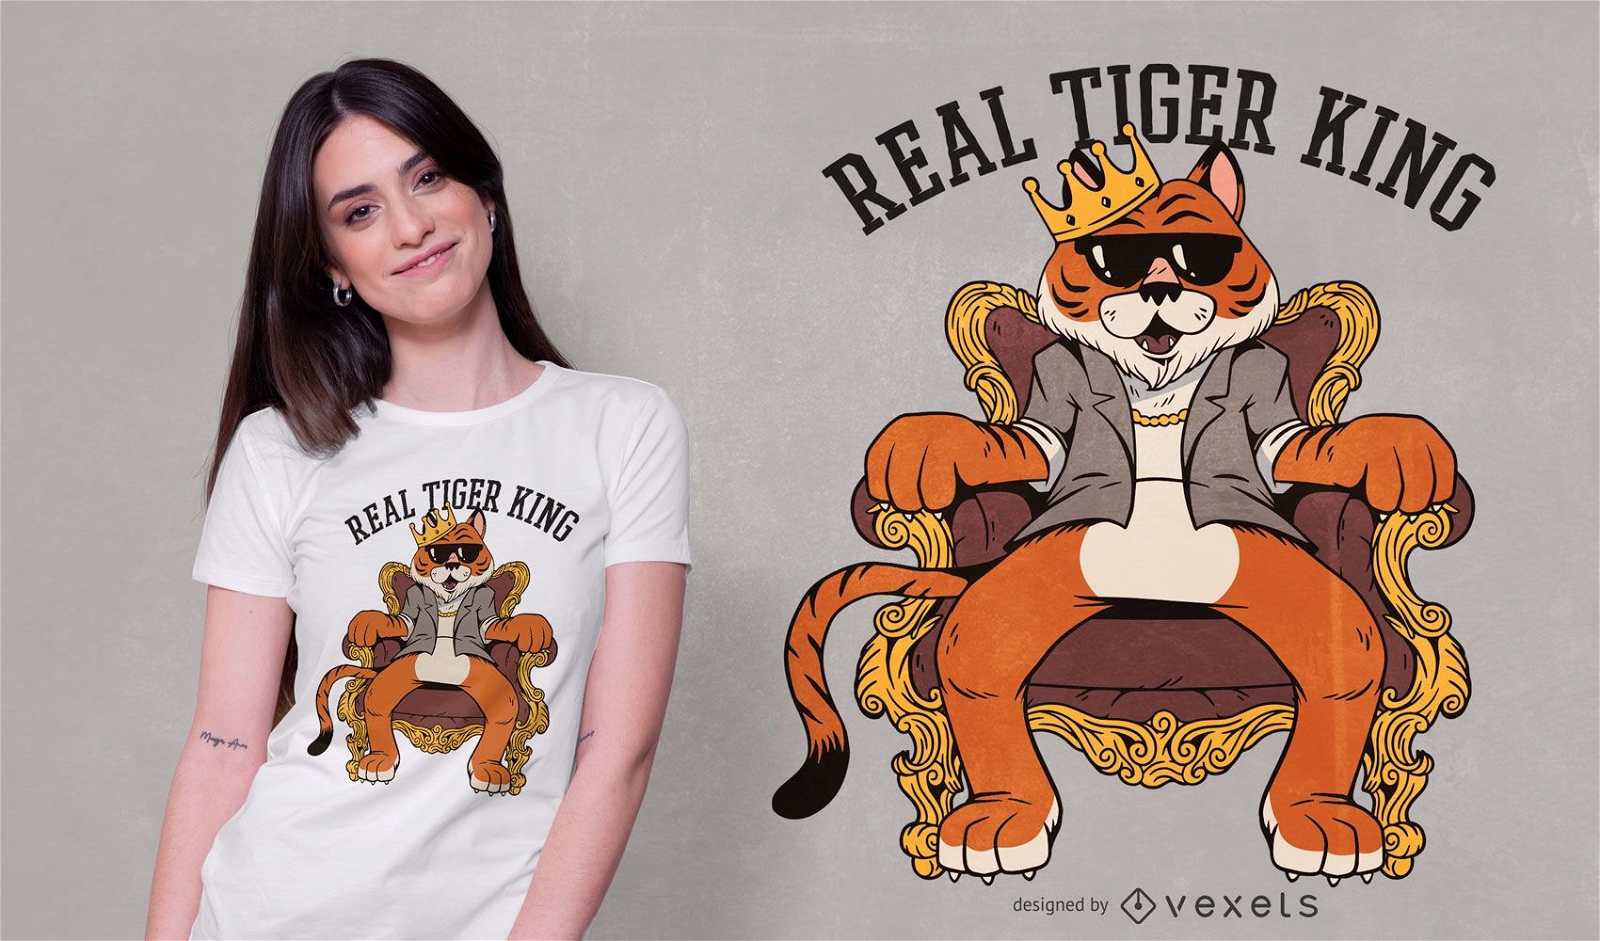 Real tiger king t-shirt design